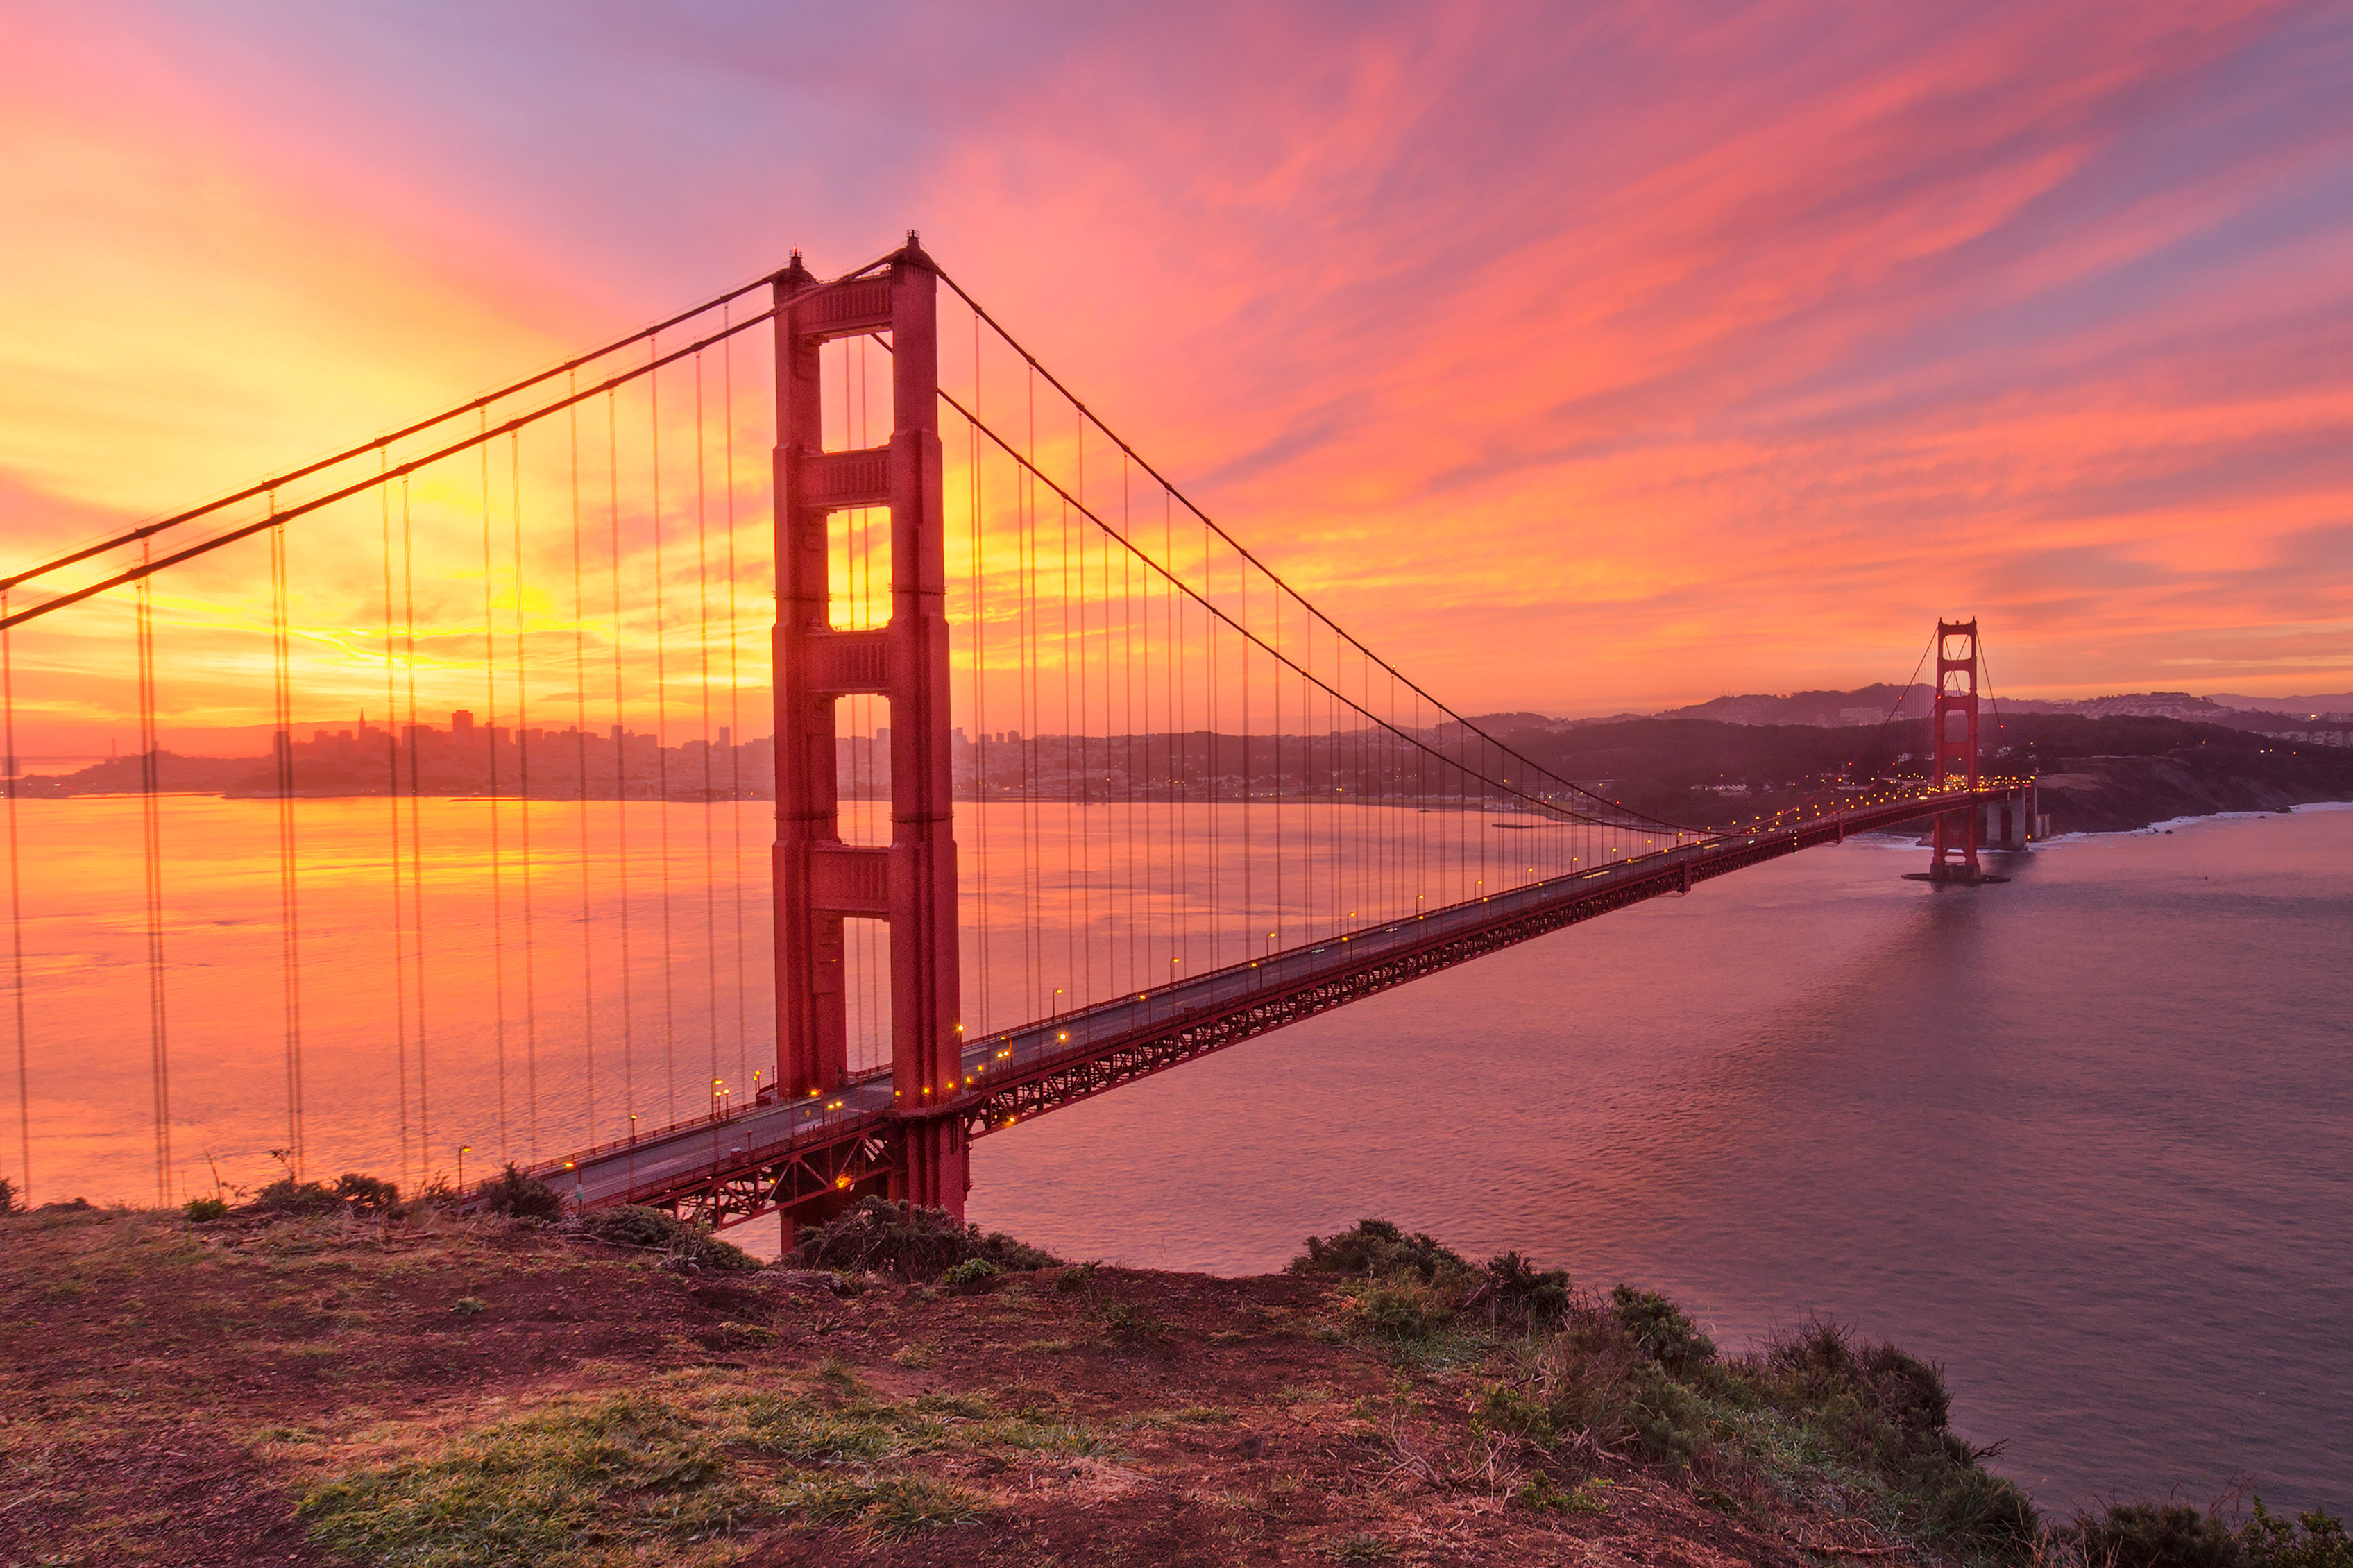 Sunrise over the Golden Gate Bridge (San Francisco, California)